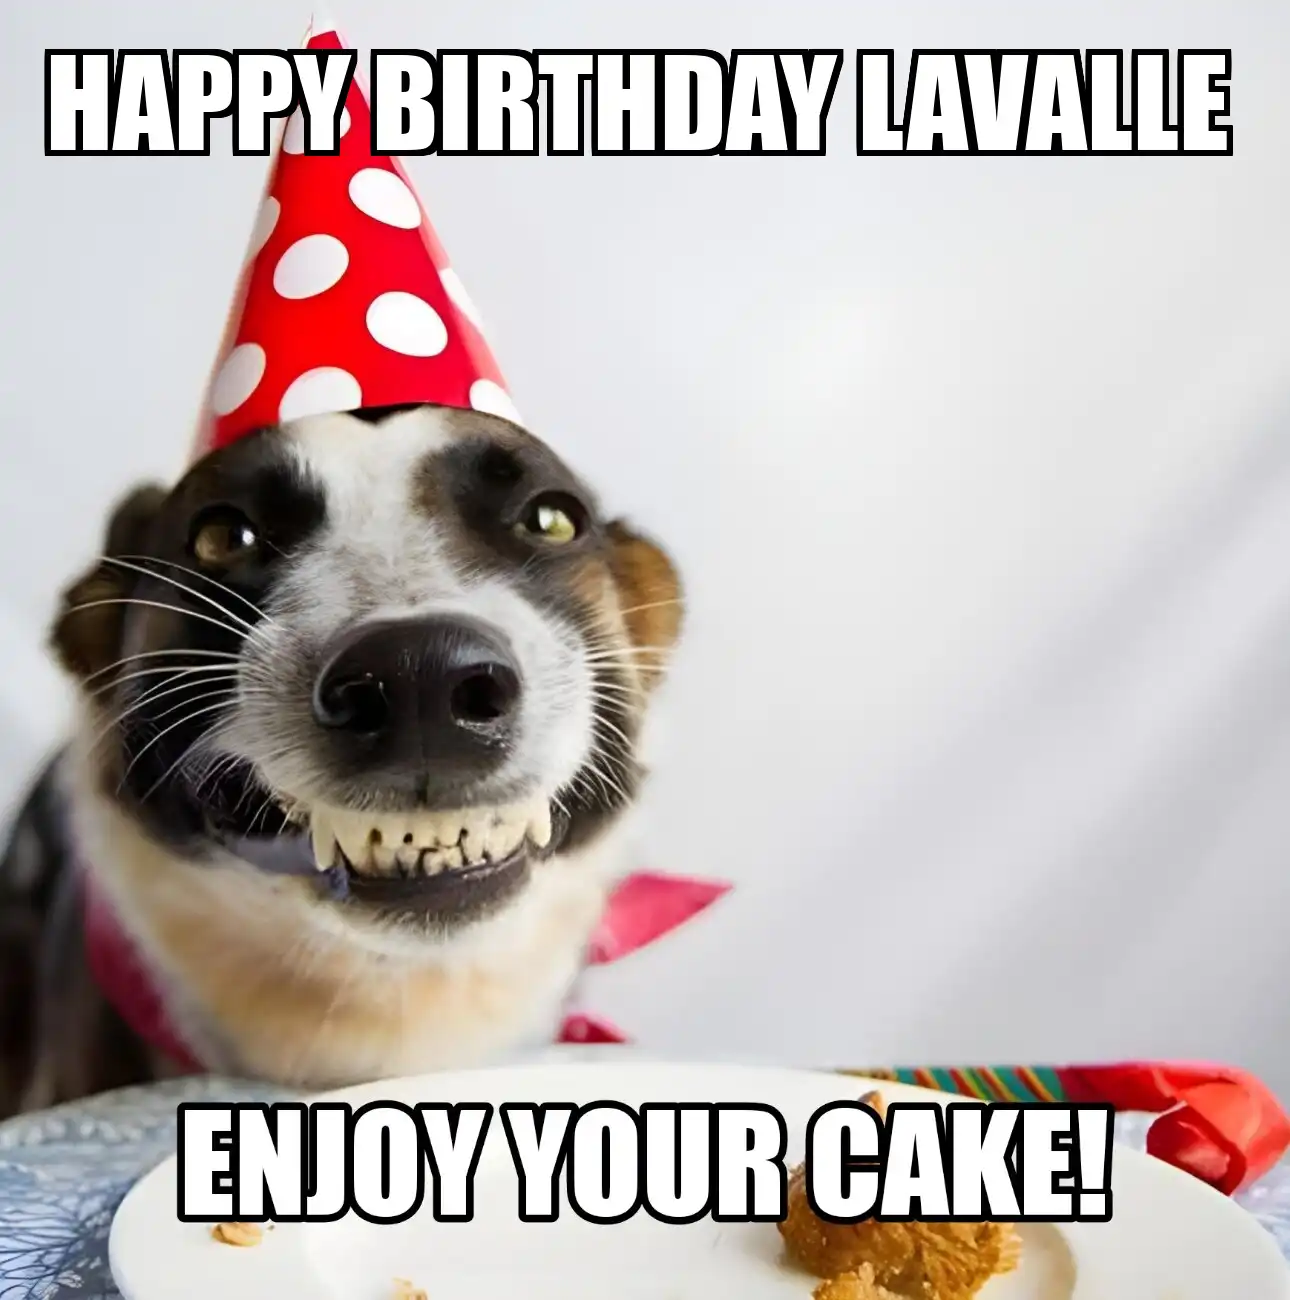 Happy Birthday Lavalle Enjoy Your Cake Dog Meme